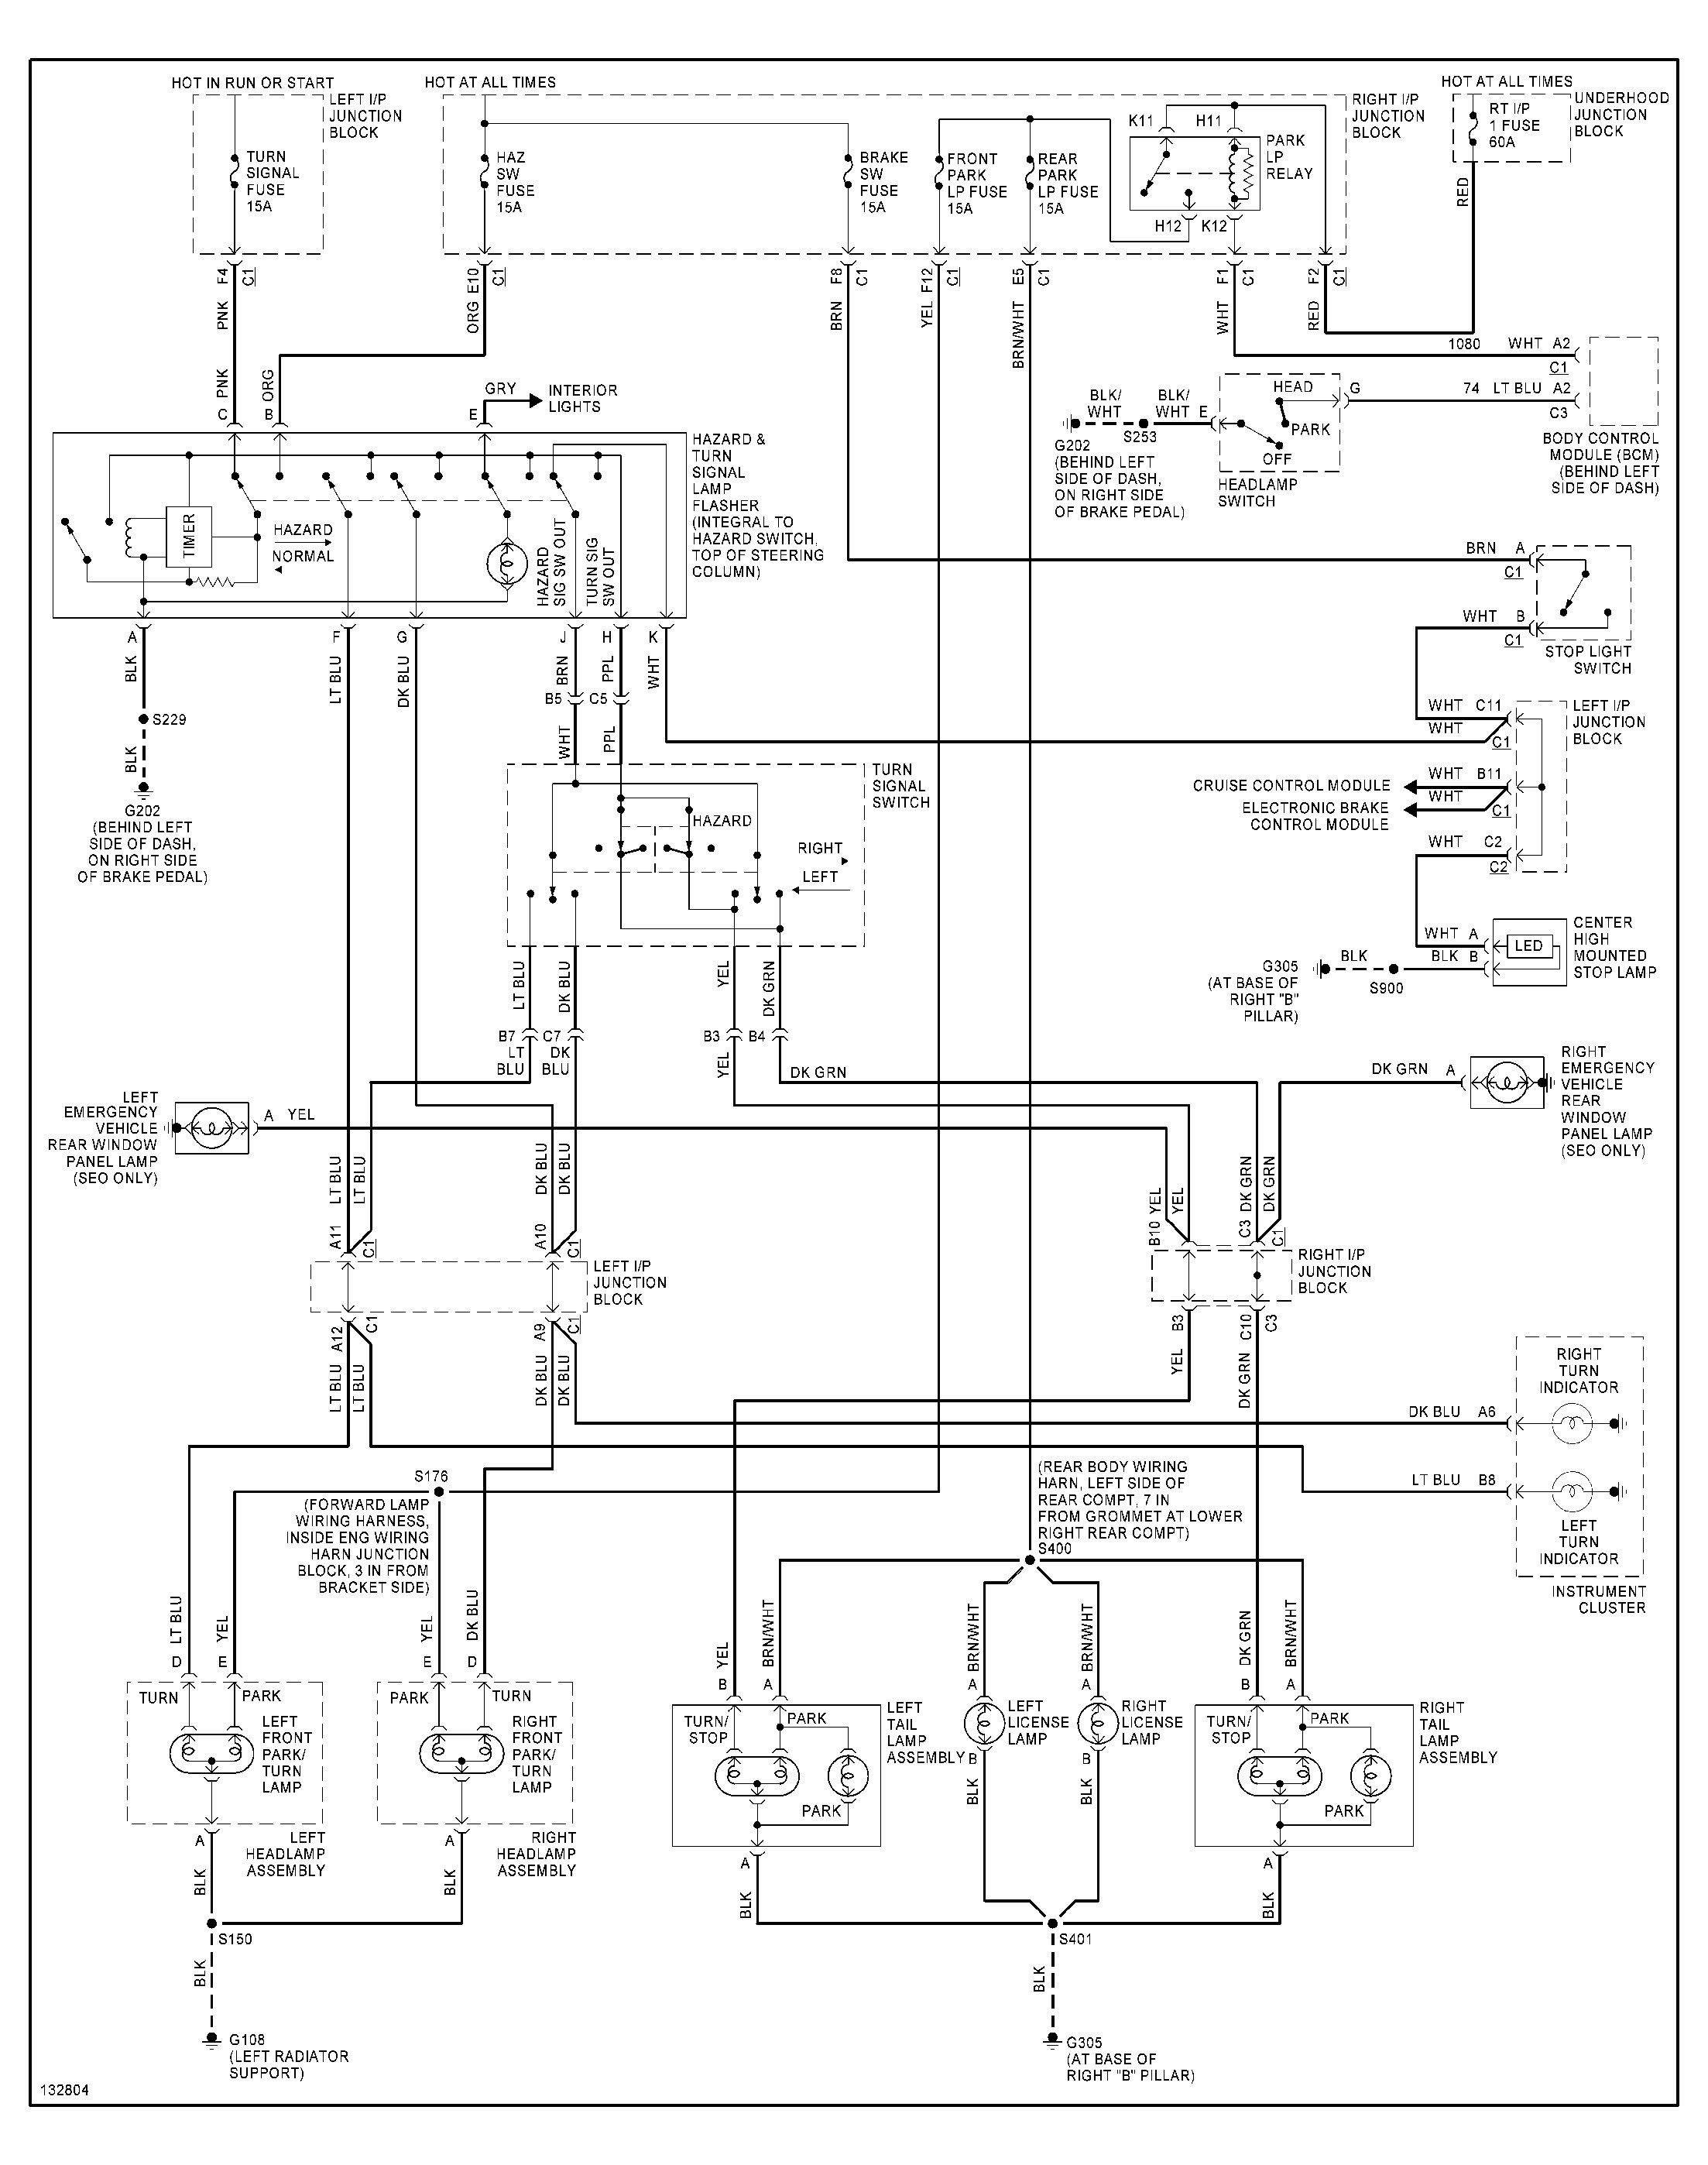 2008 Malibu Starter Circuit Schematic Diagram] 65 Impala Rear Lights Wiring Diagram Full Version Of 2008 Malibu Starter Circuit Schematic